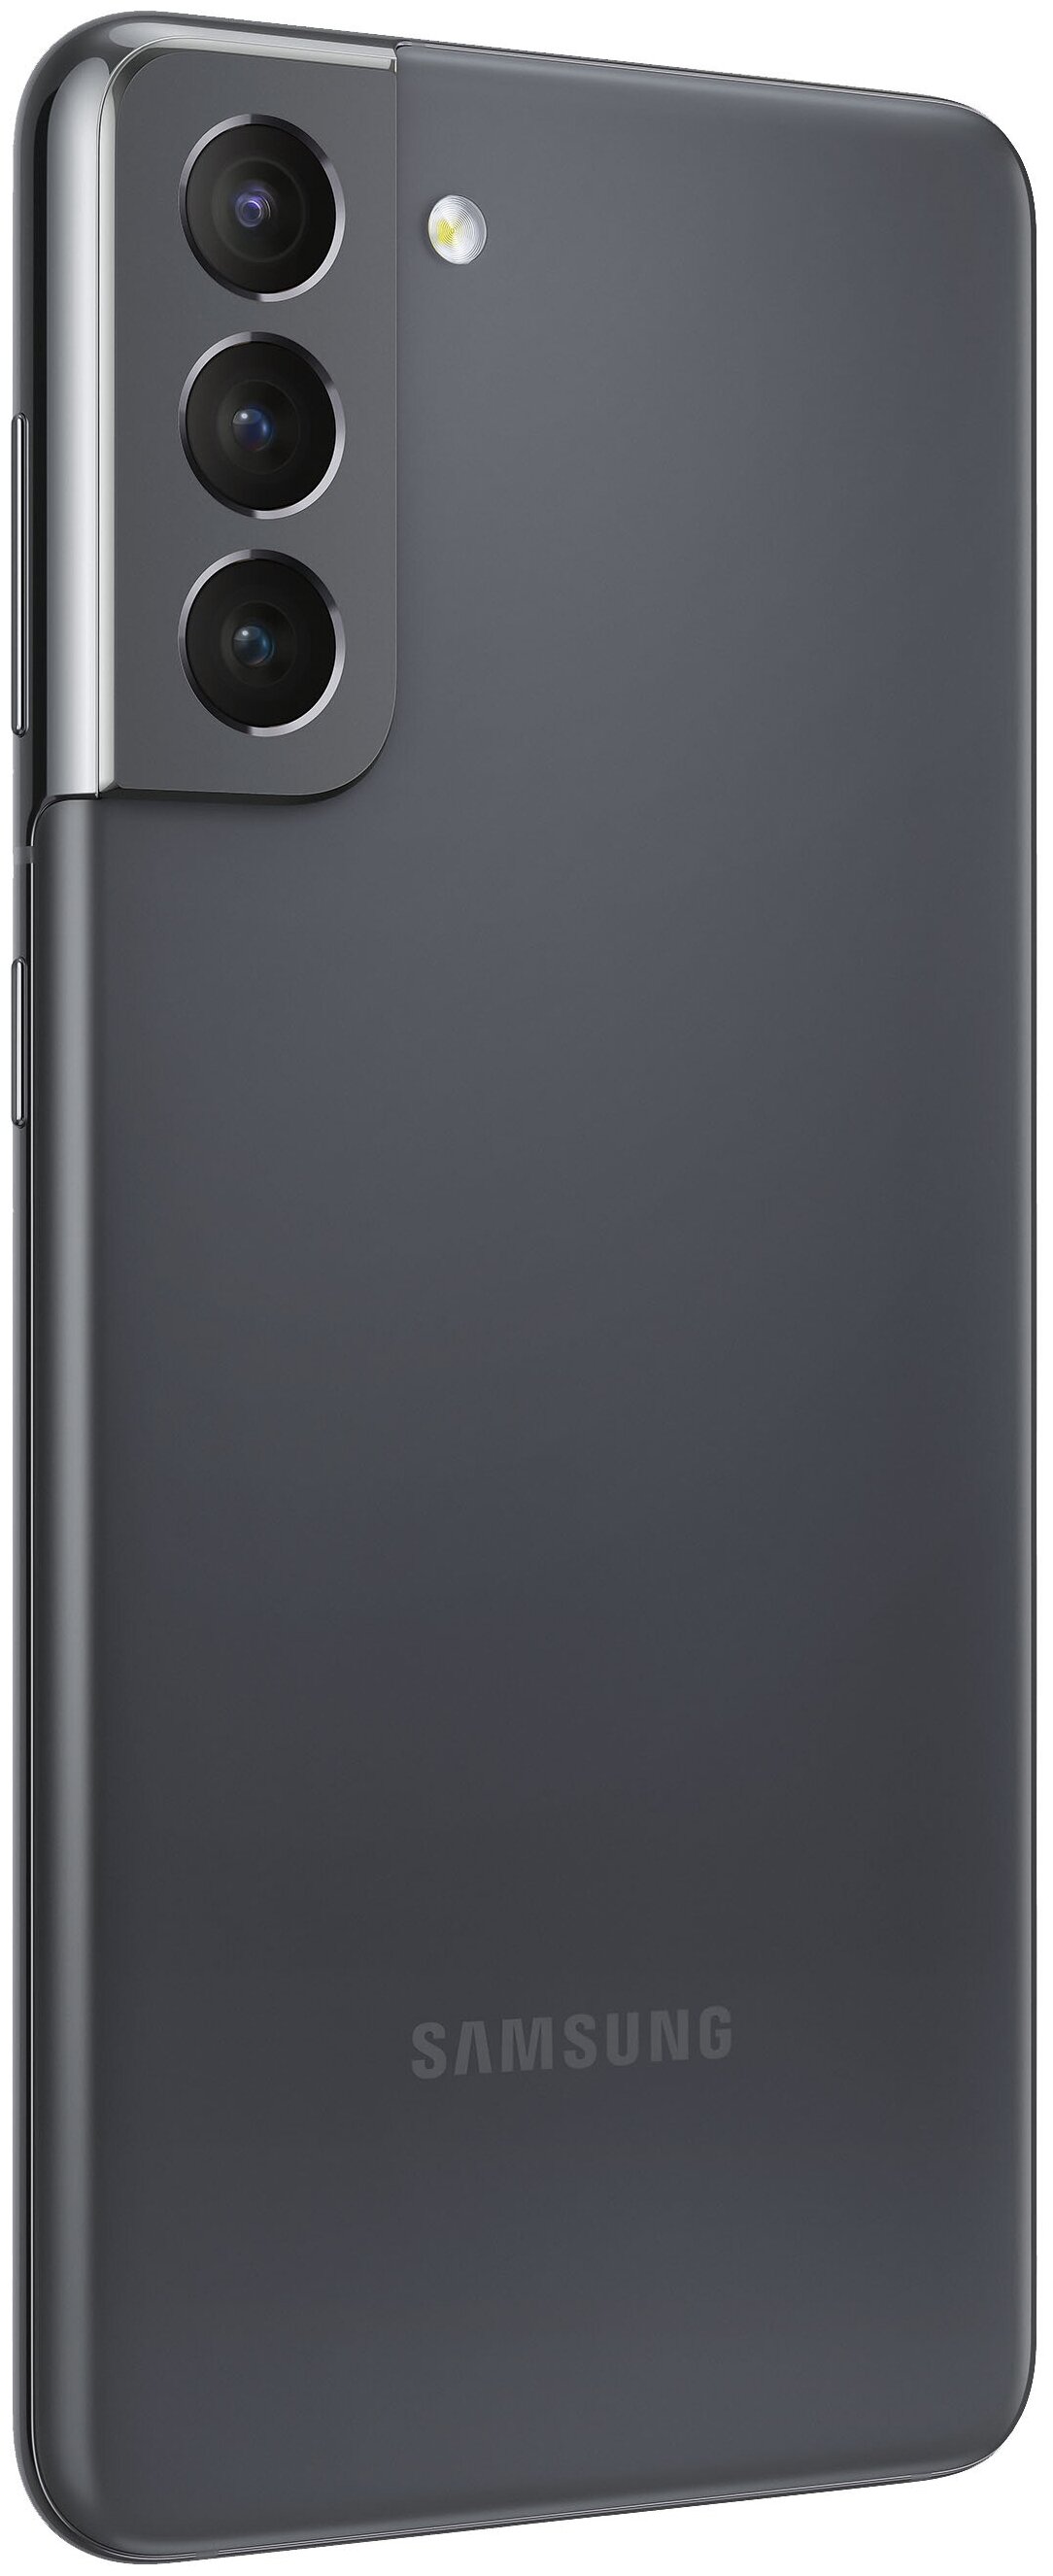 Samsung Galaxy S21 5G (SM-G991B) - sIM-карты: 2 (nano SIM+eSIM)